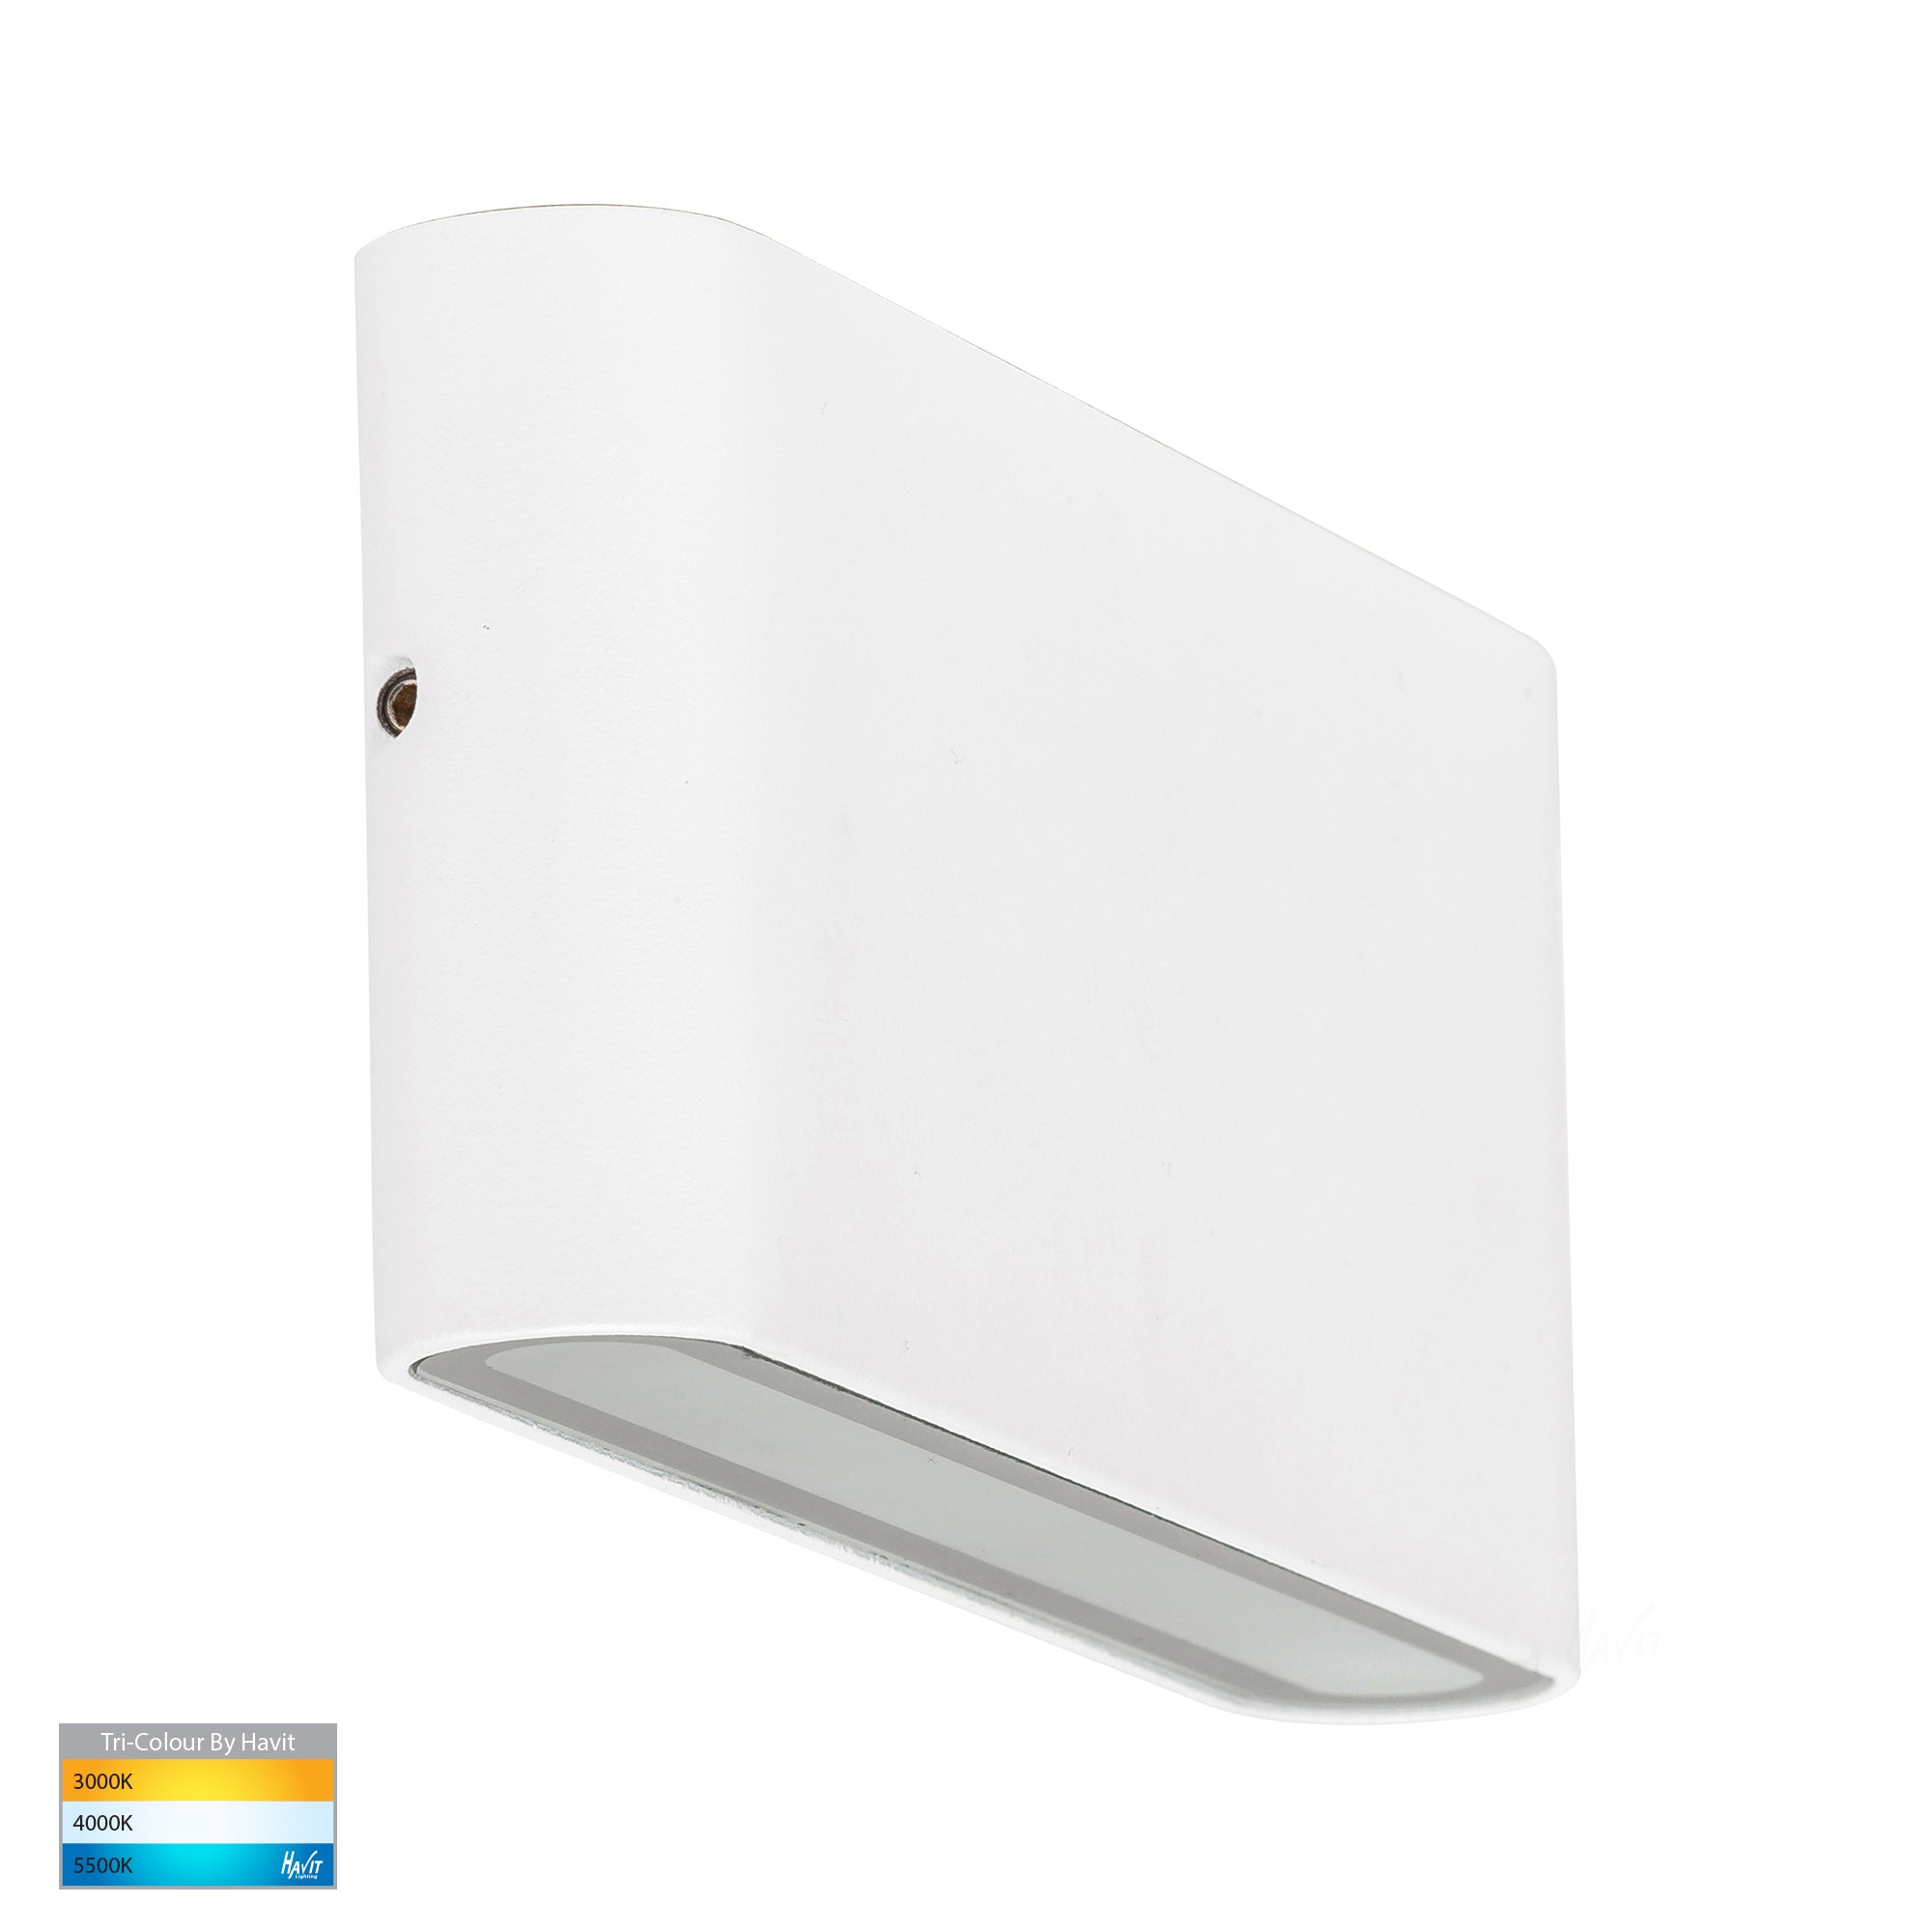 HV3643T-WHT - Lisse White Fixed Down TRI Colour LED Wall Light